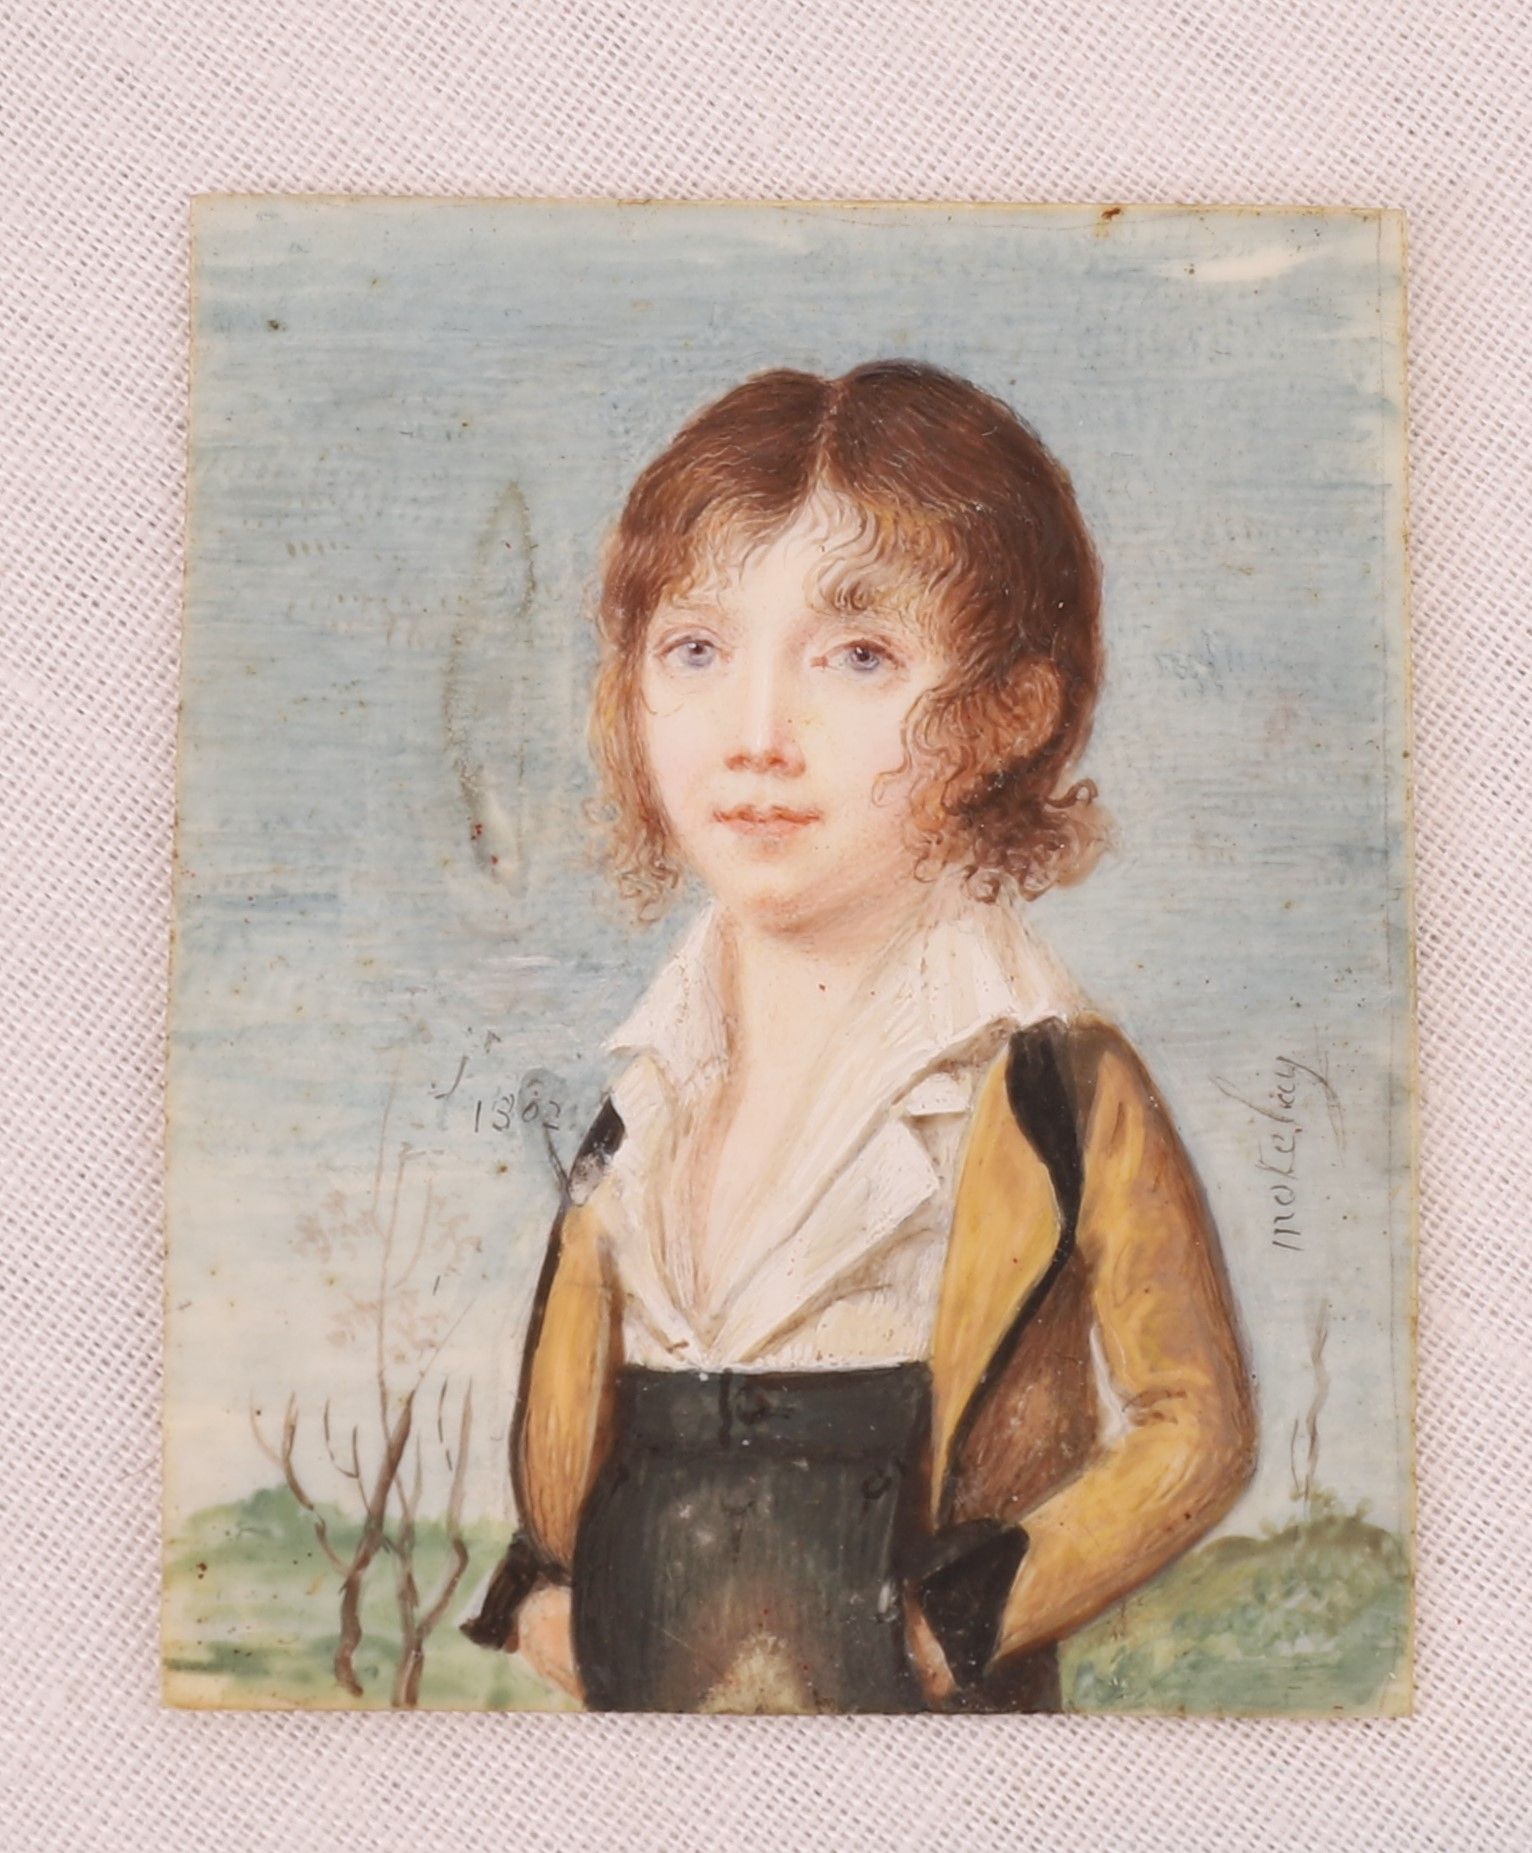 Null 艾蒂安-蒙泰莱(Etienne MONTELAY)的微型画《儿童画像》(第十八至十九期)

有签名和日期的油画，1802年

5,2 x 4,2 cm